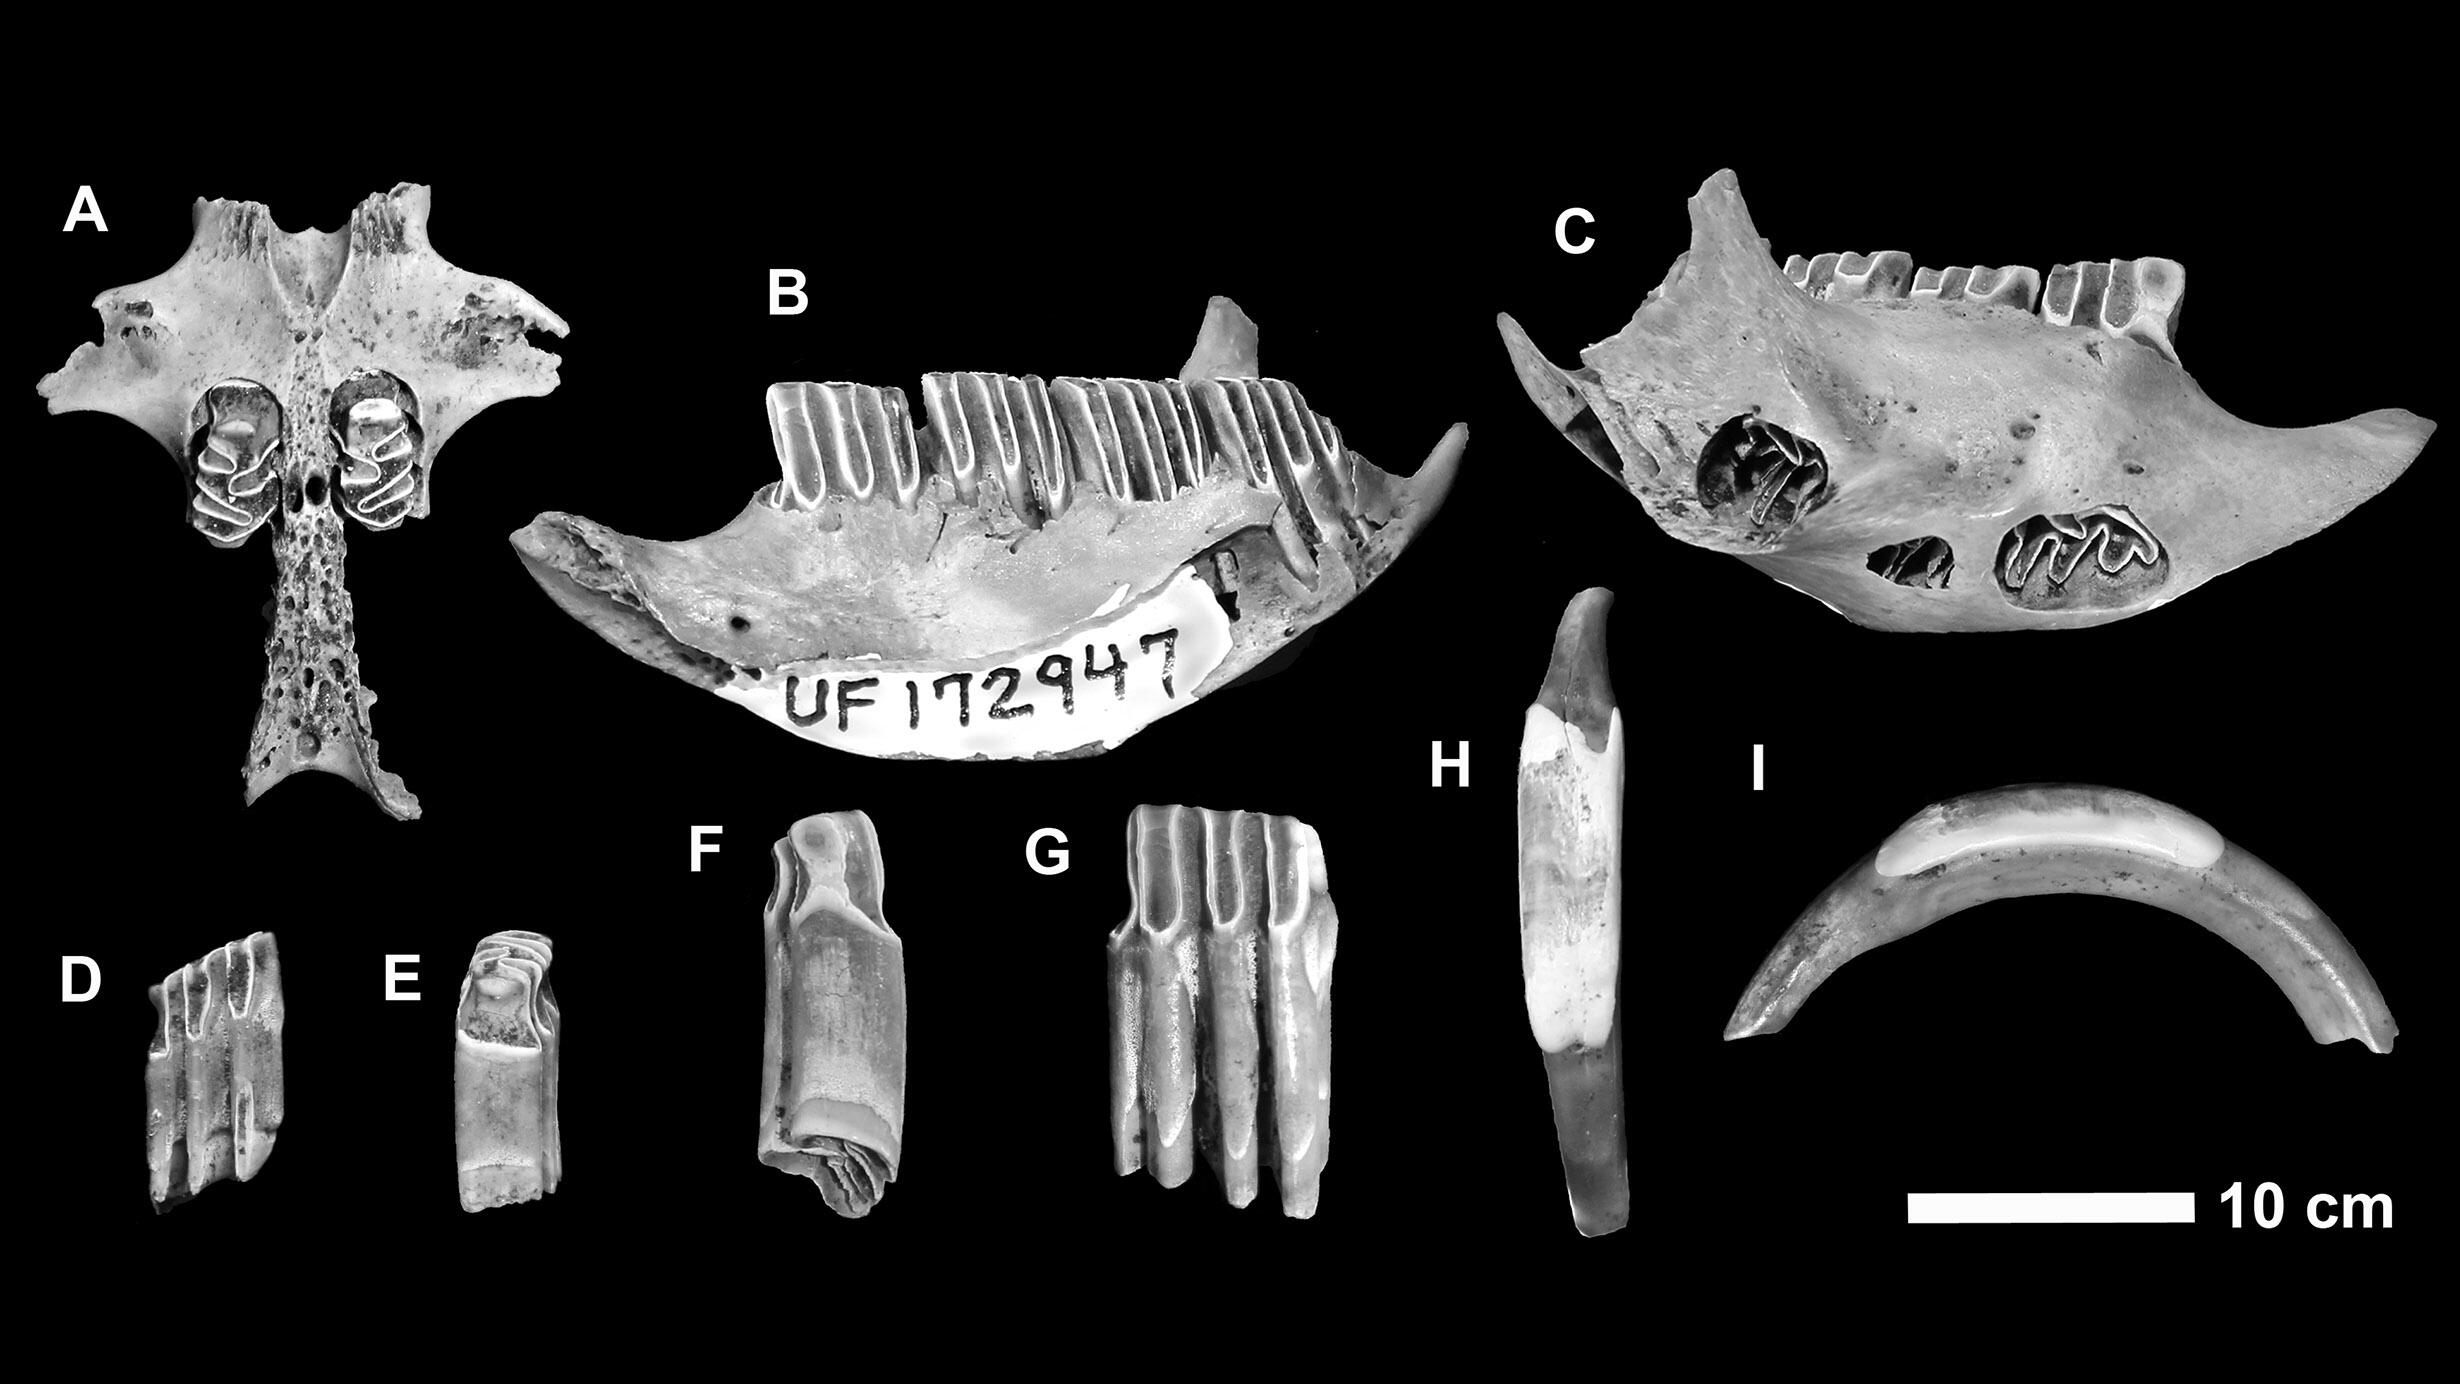 Fossilized bones of extinct mammals unique to the Cayman Islands.